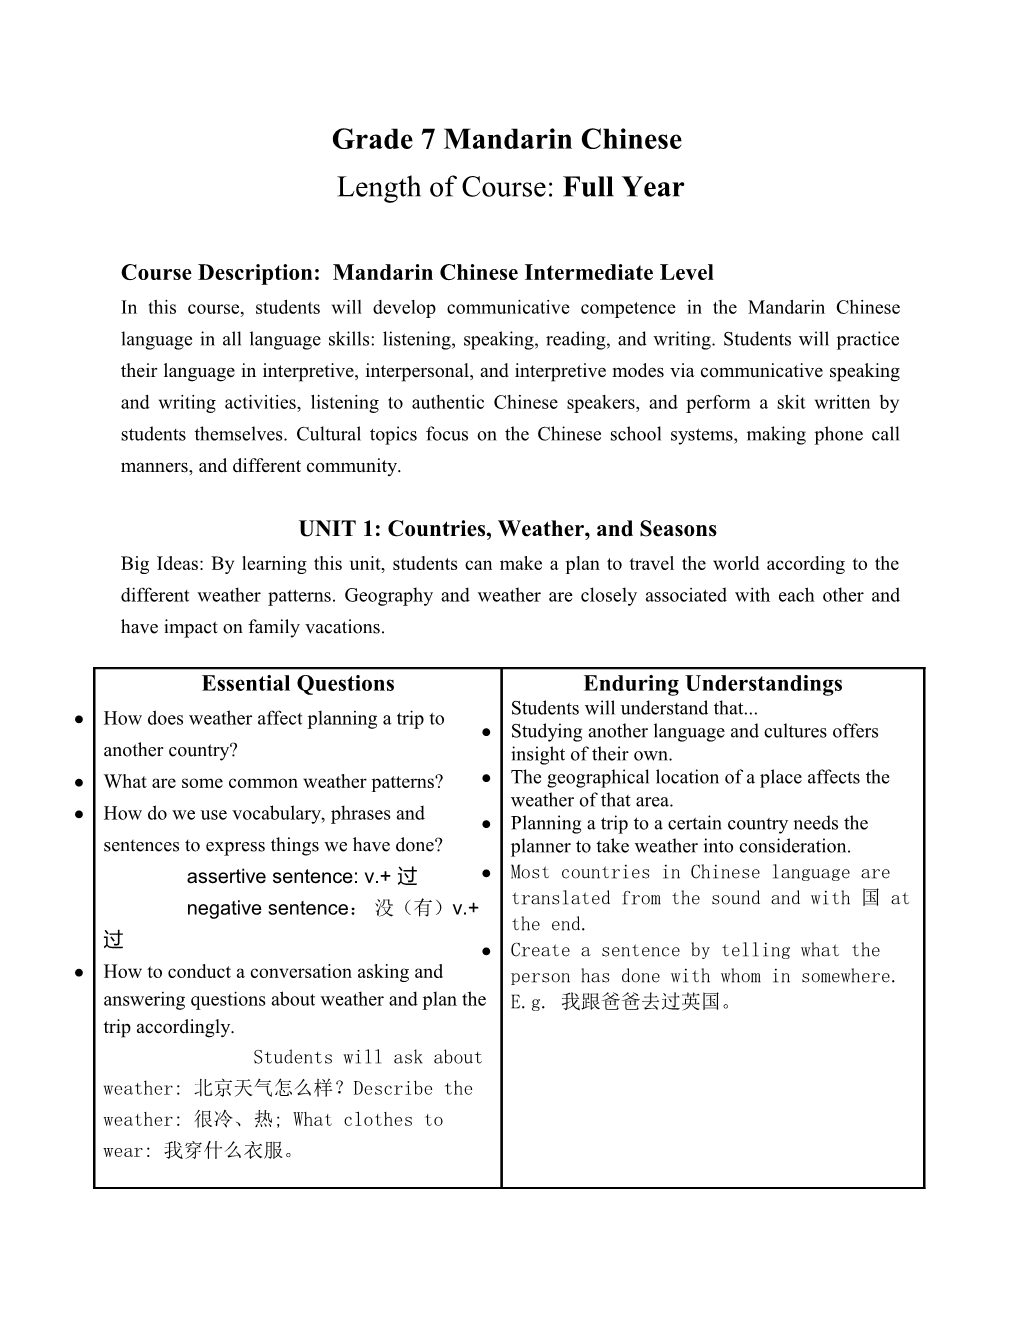 Course Description: Mandarin Chinese Intermediate Level